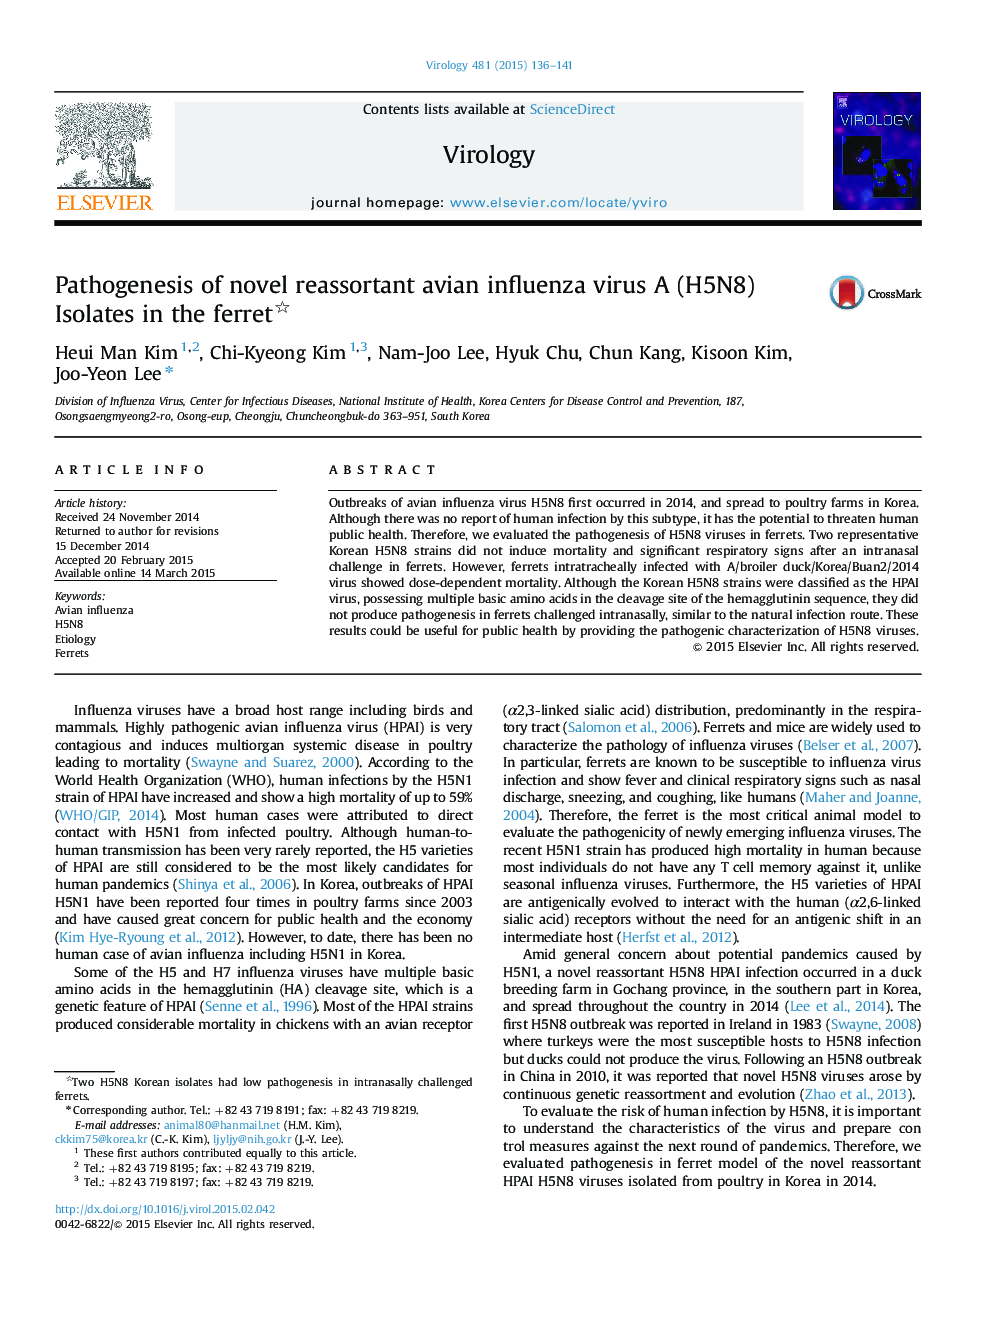 Pathogenesis of novel reassortant avian influenza virus A (H5N8) Isolates in the ferret